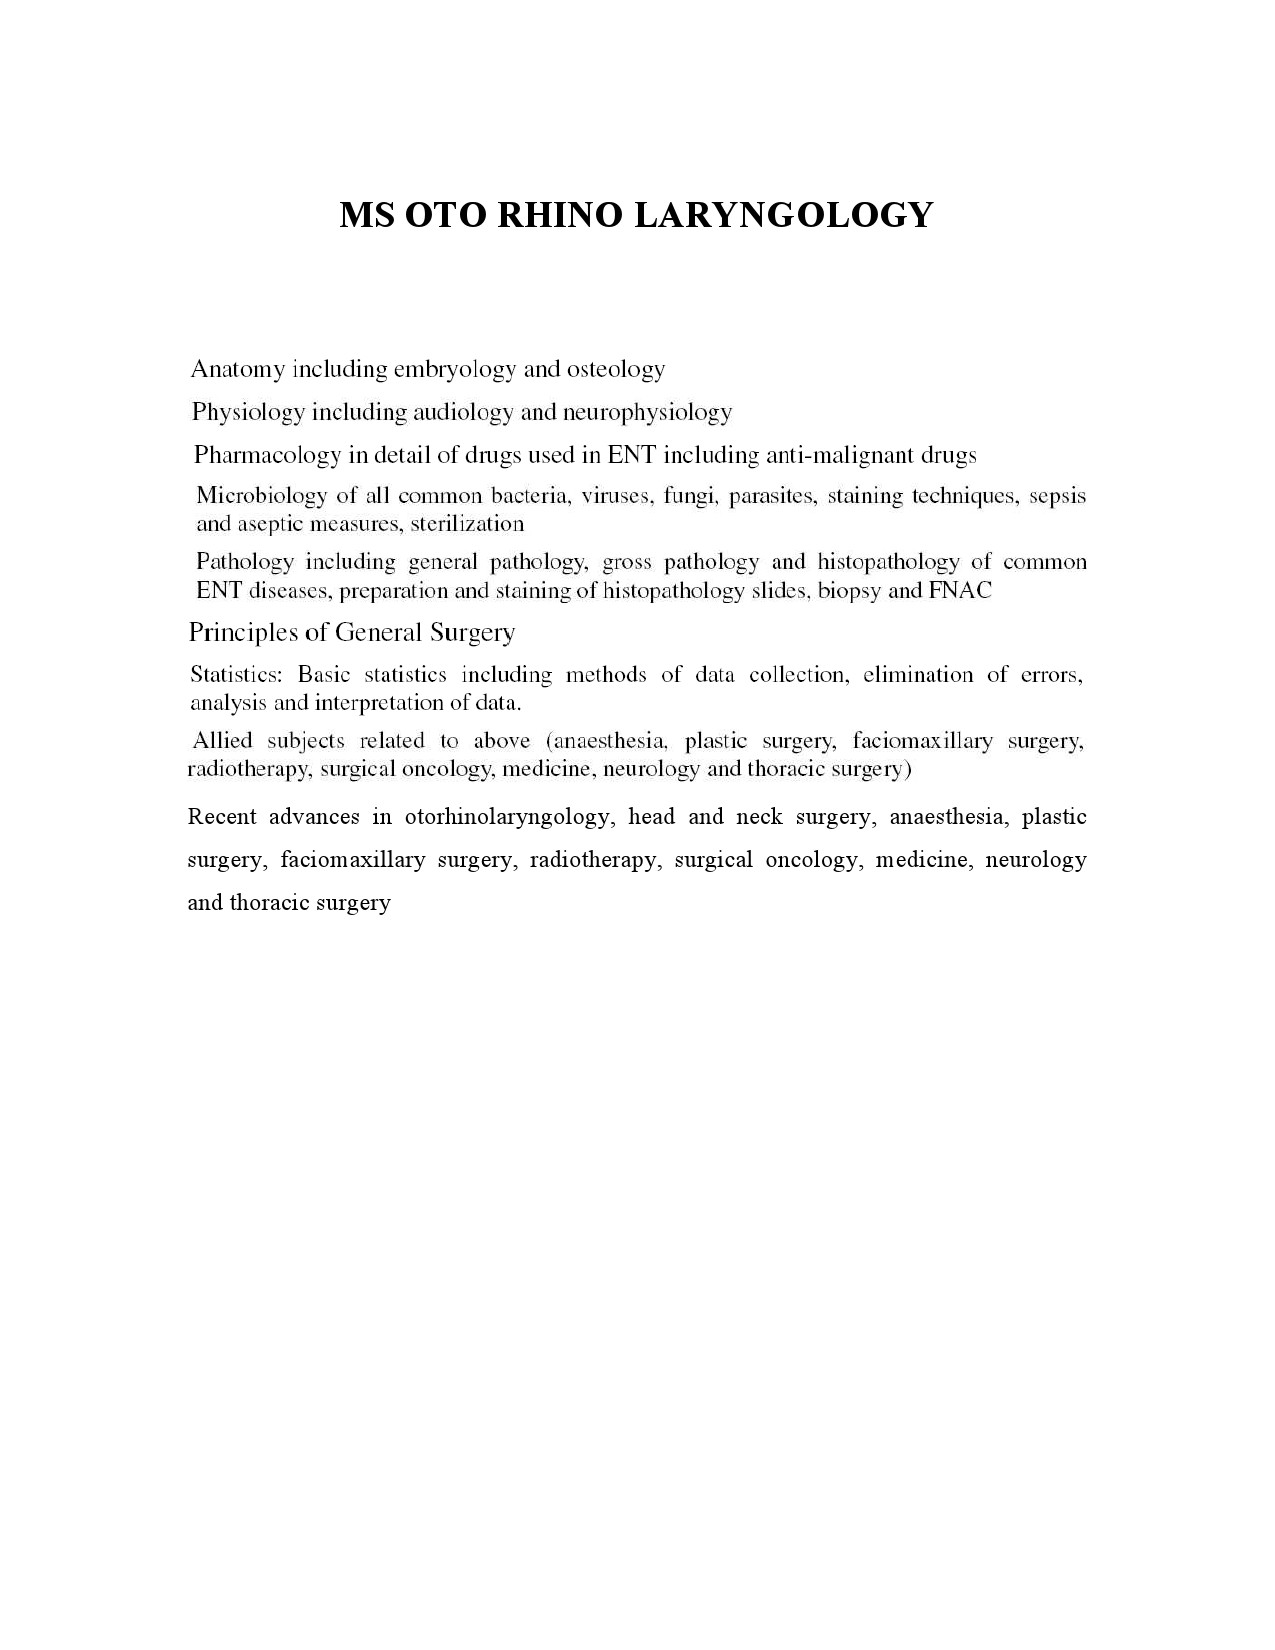 MS Level Syllabus Oto Rhino Laryngology - Notification Image 1